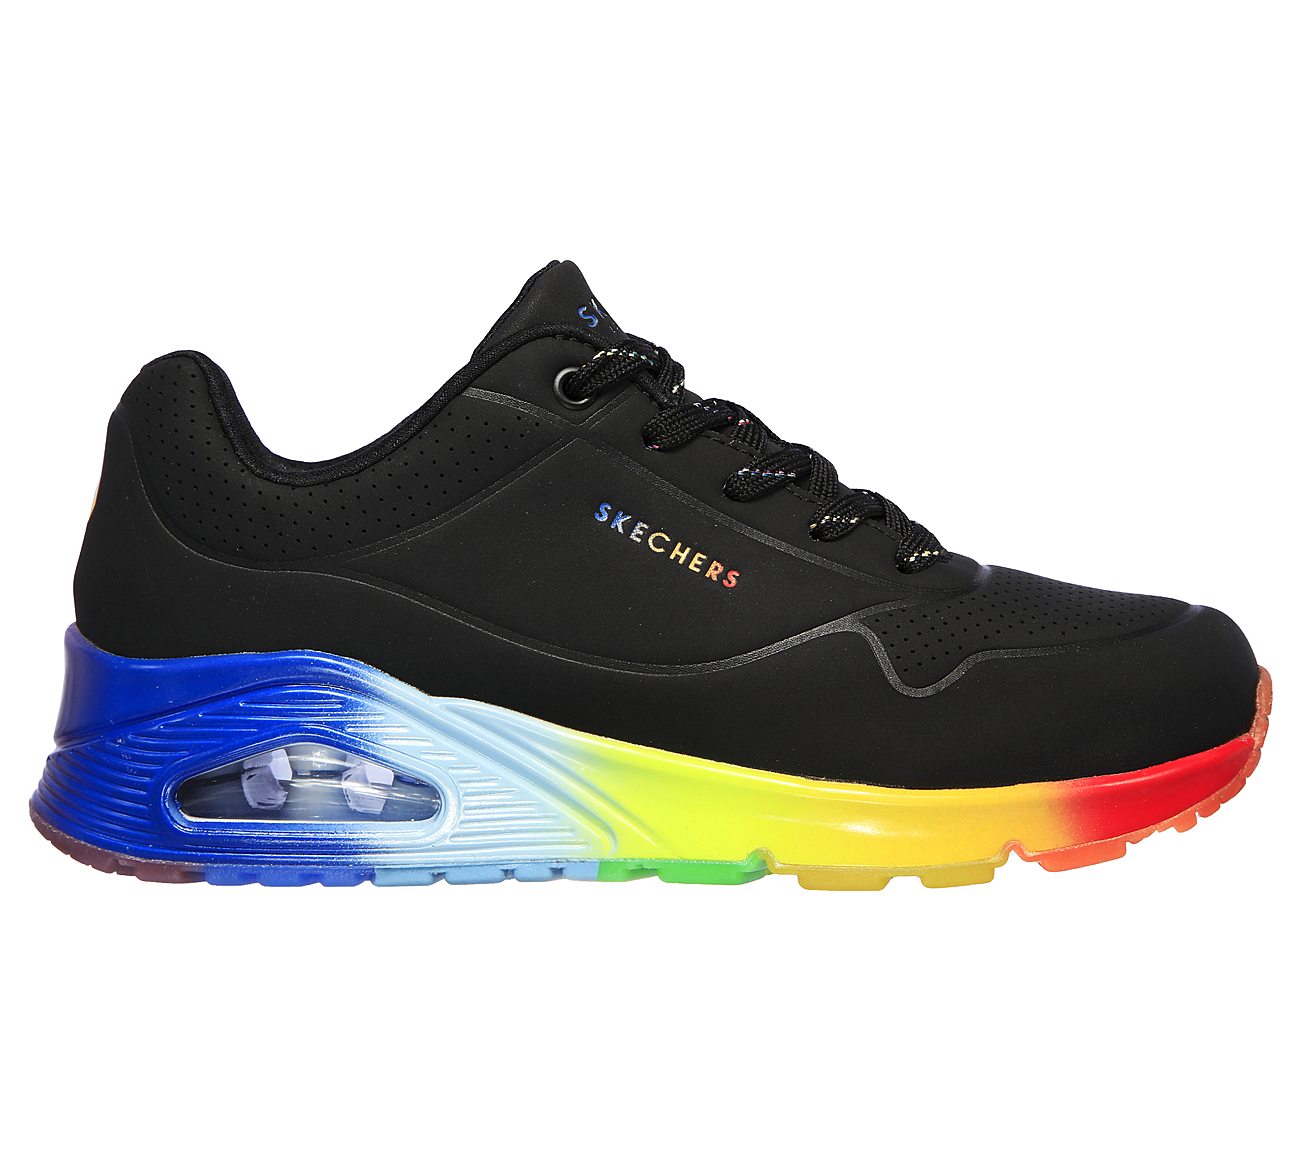 rainbow skechers shoes